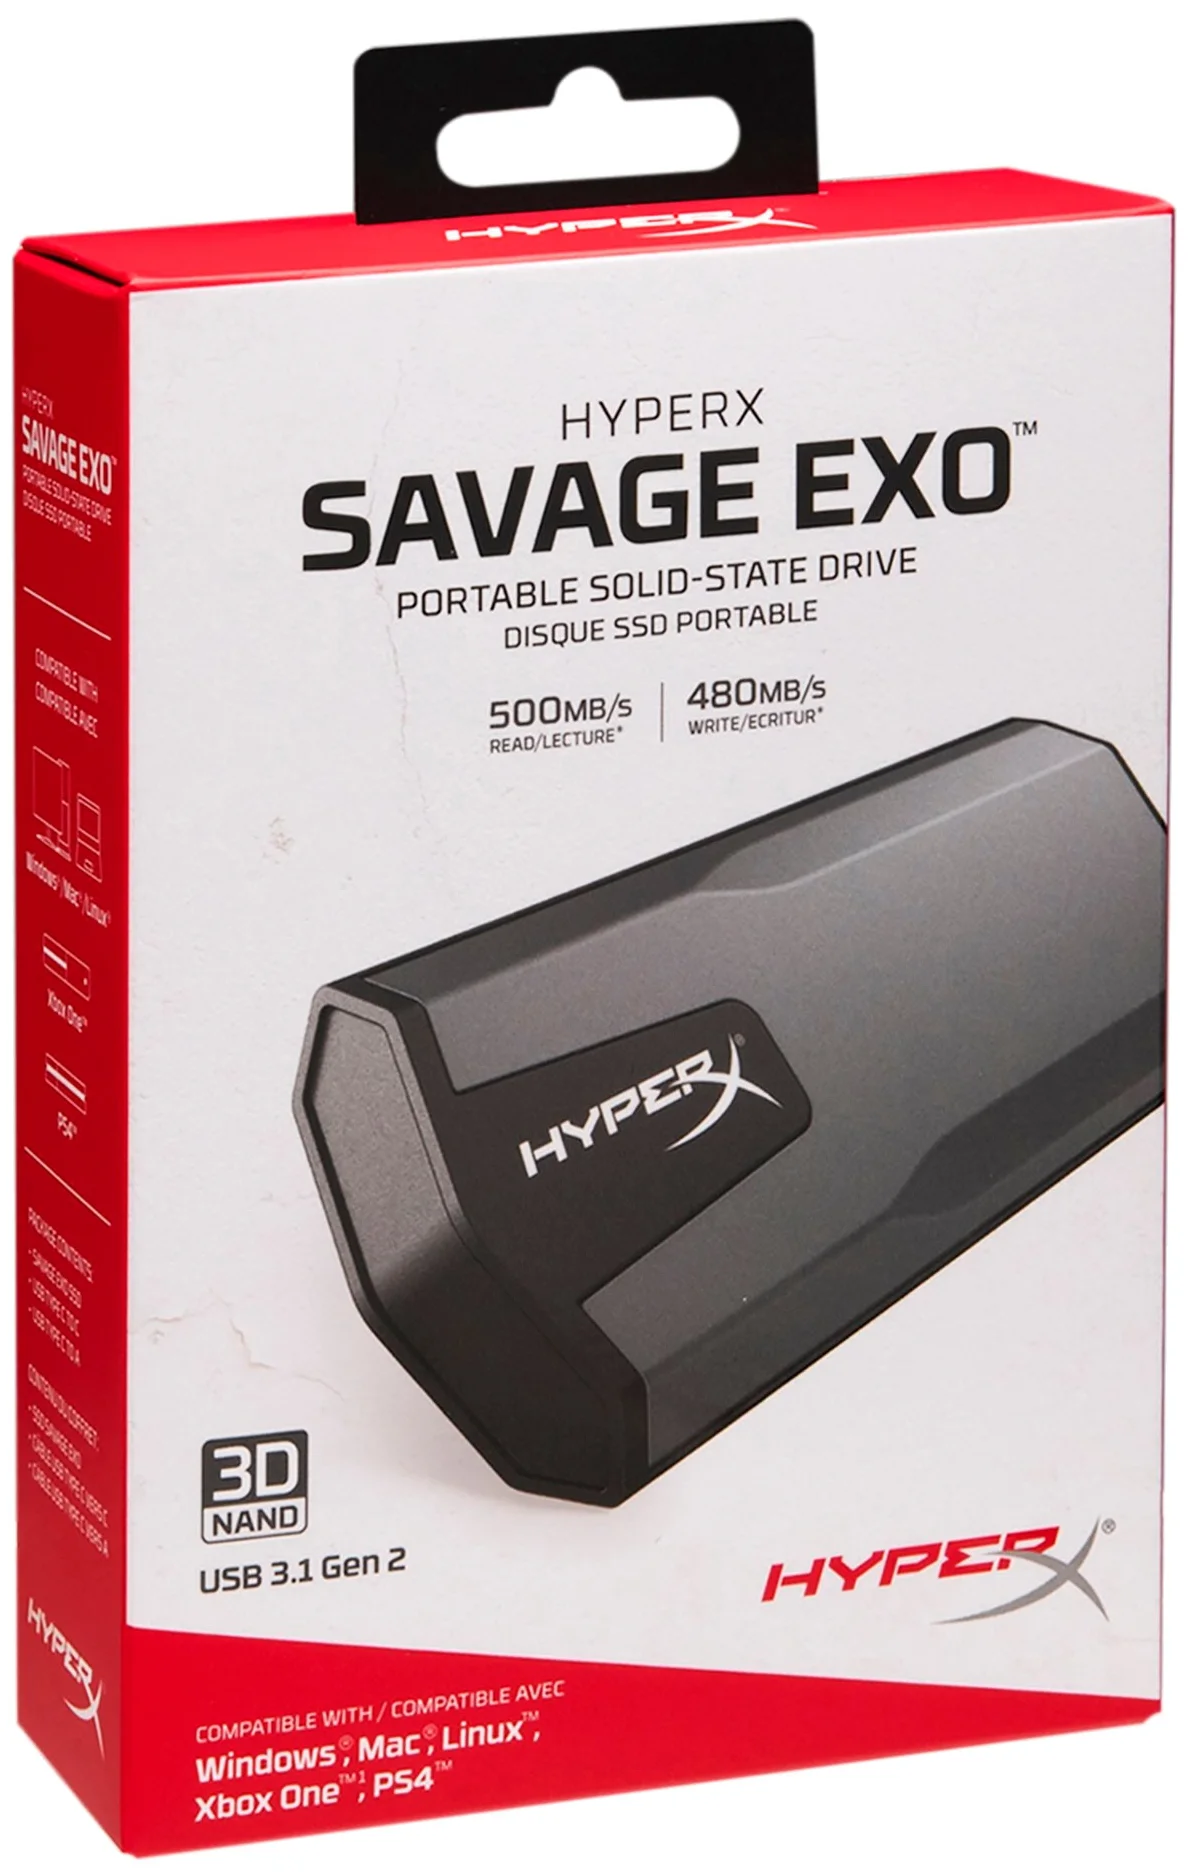 SSD HyperX SAVAGE EXO - размеры (ДхШхВ): 123.82х48.61х10.24 мм